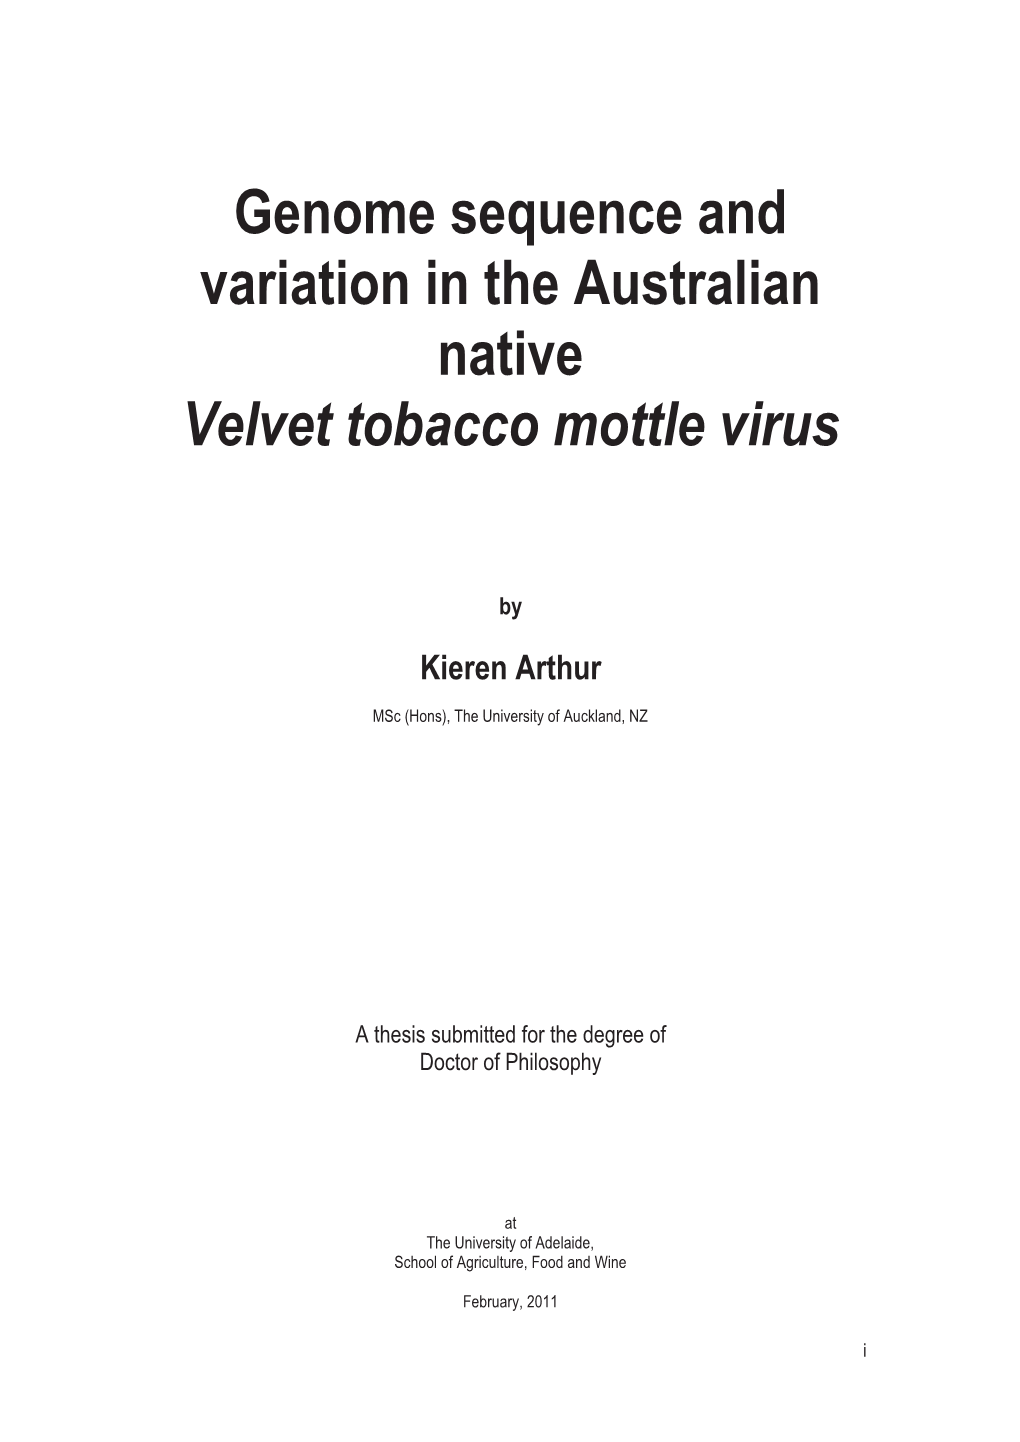 Genome Sequence and Variation in the Australian Native Velvet Tobacco Mottle Virus